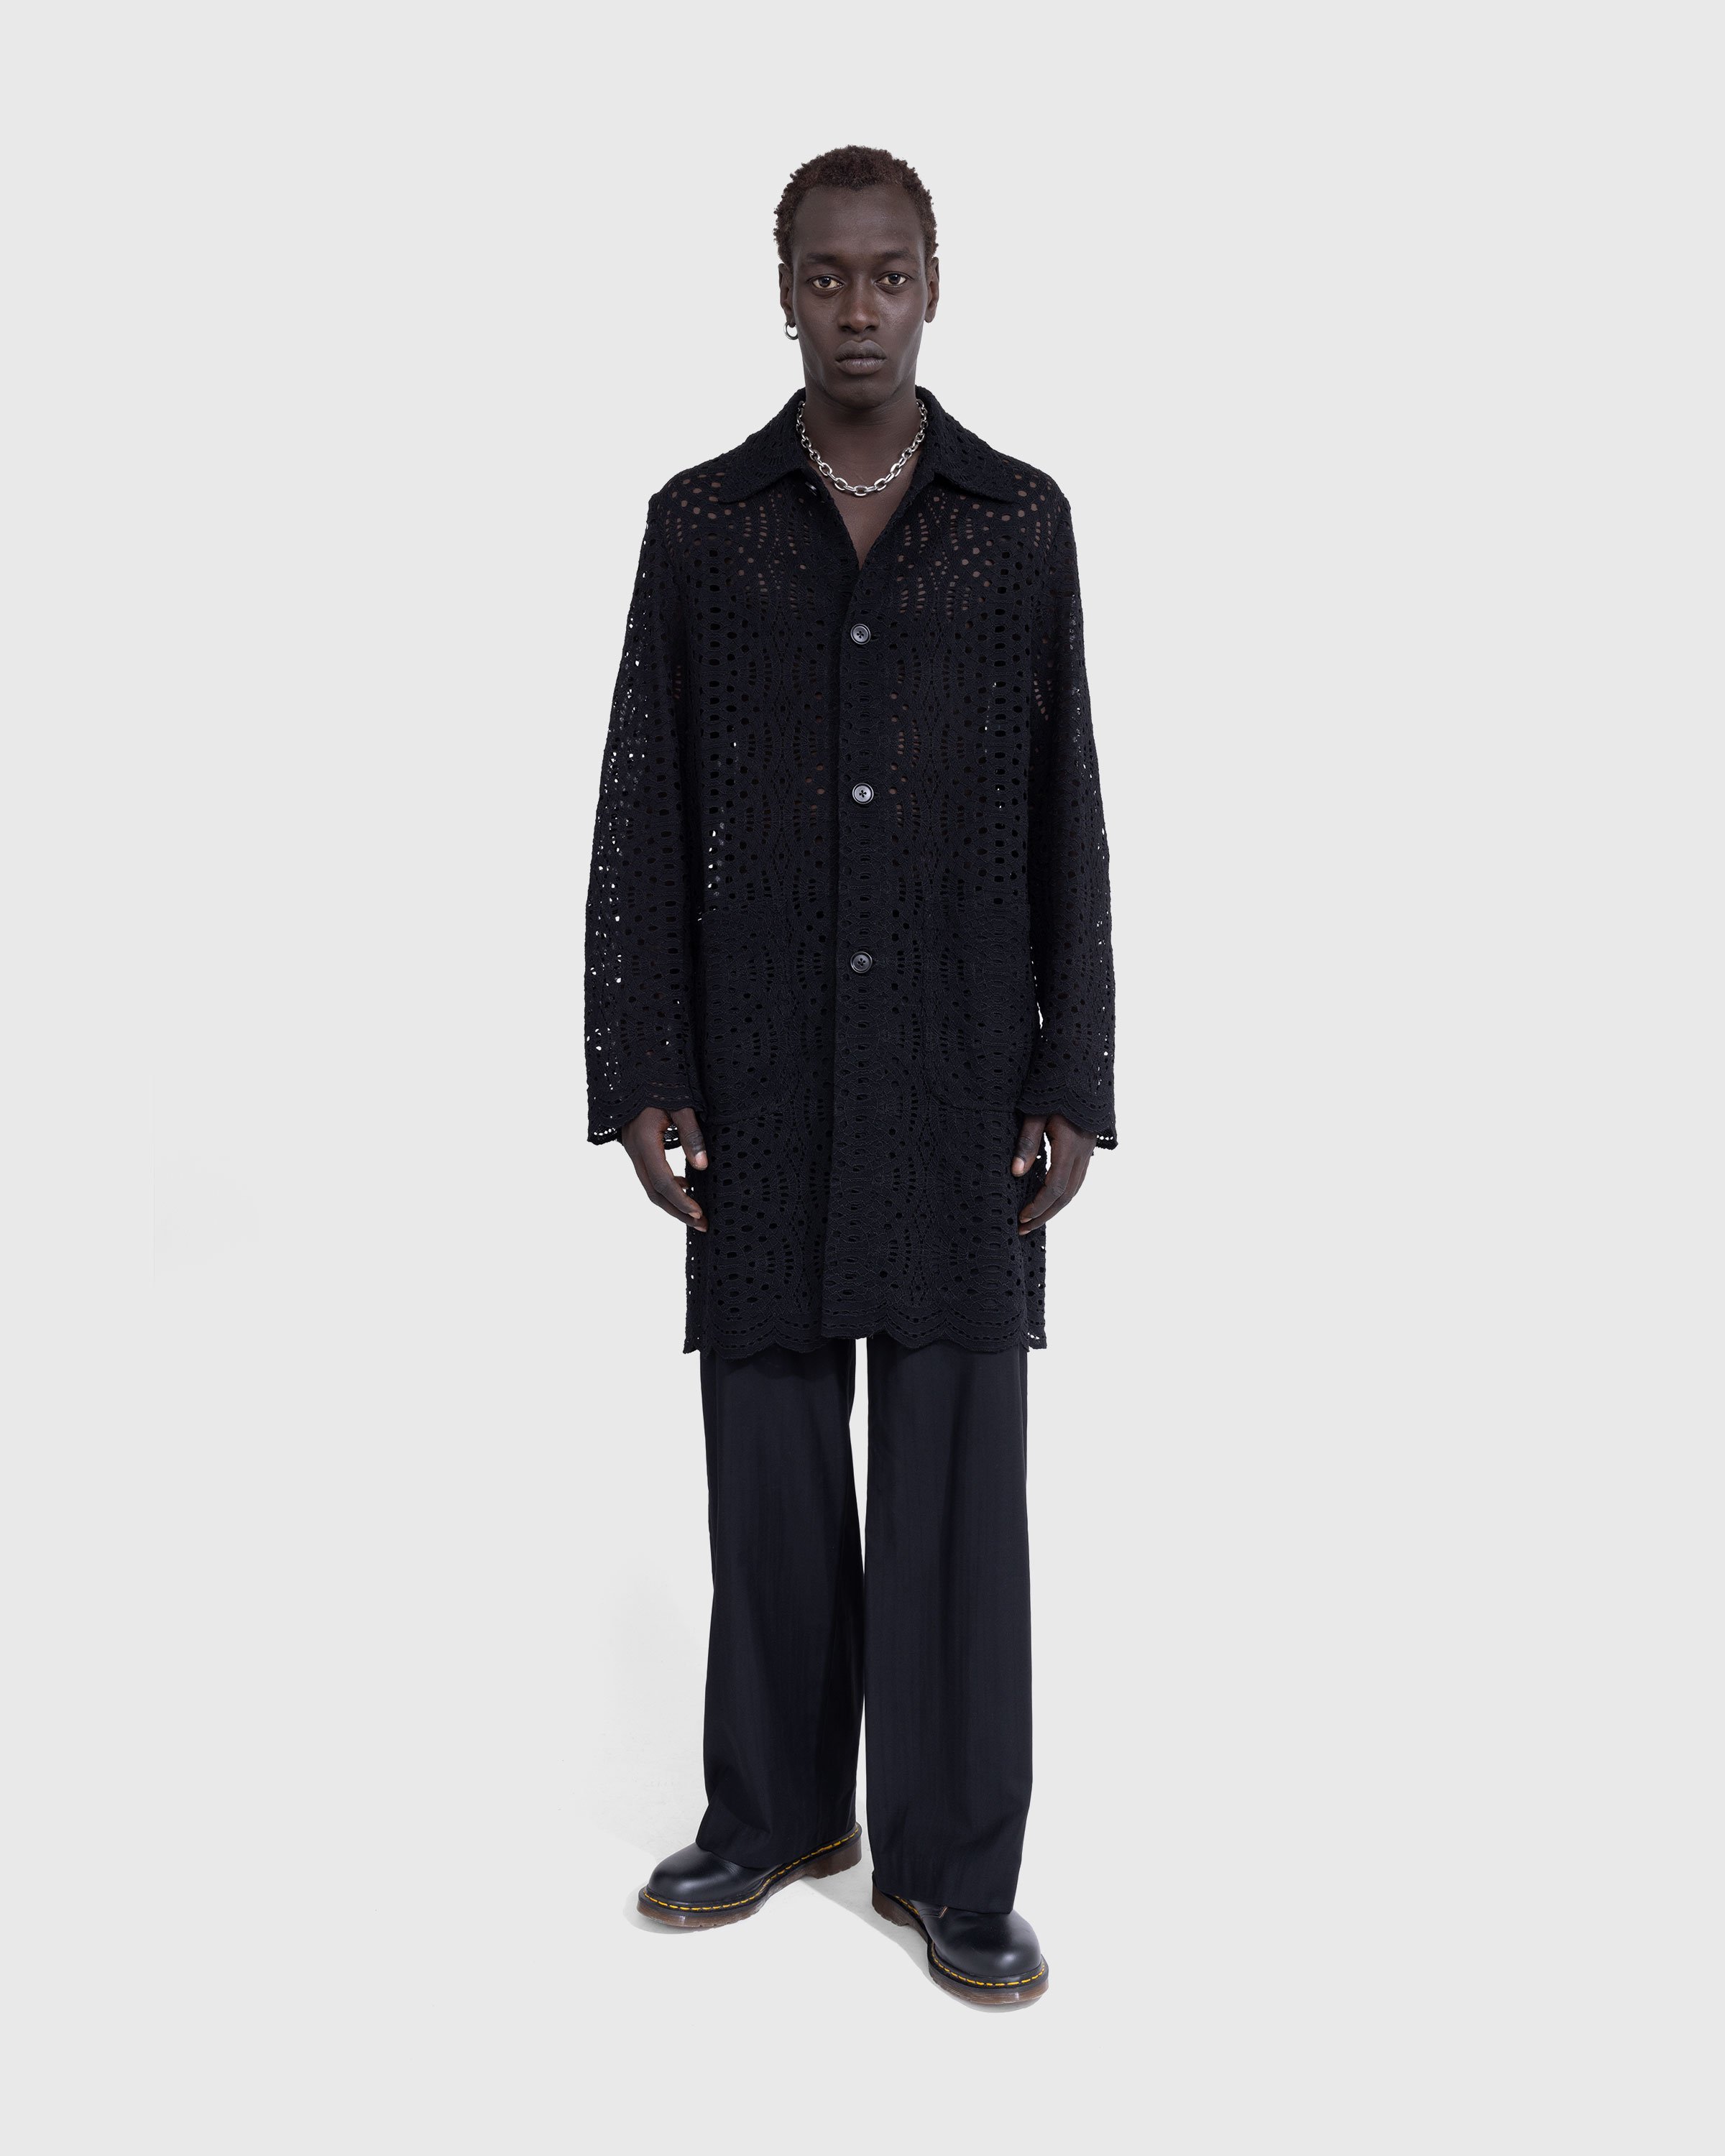 Dries van Noten - RAKIN COAT - Clothing - Black - Image 3